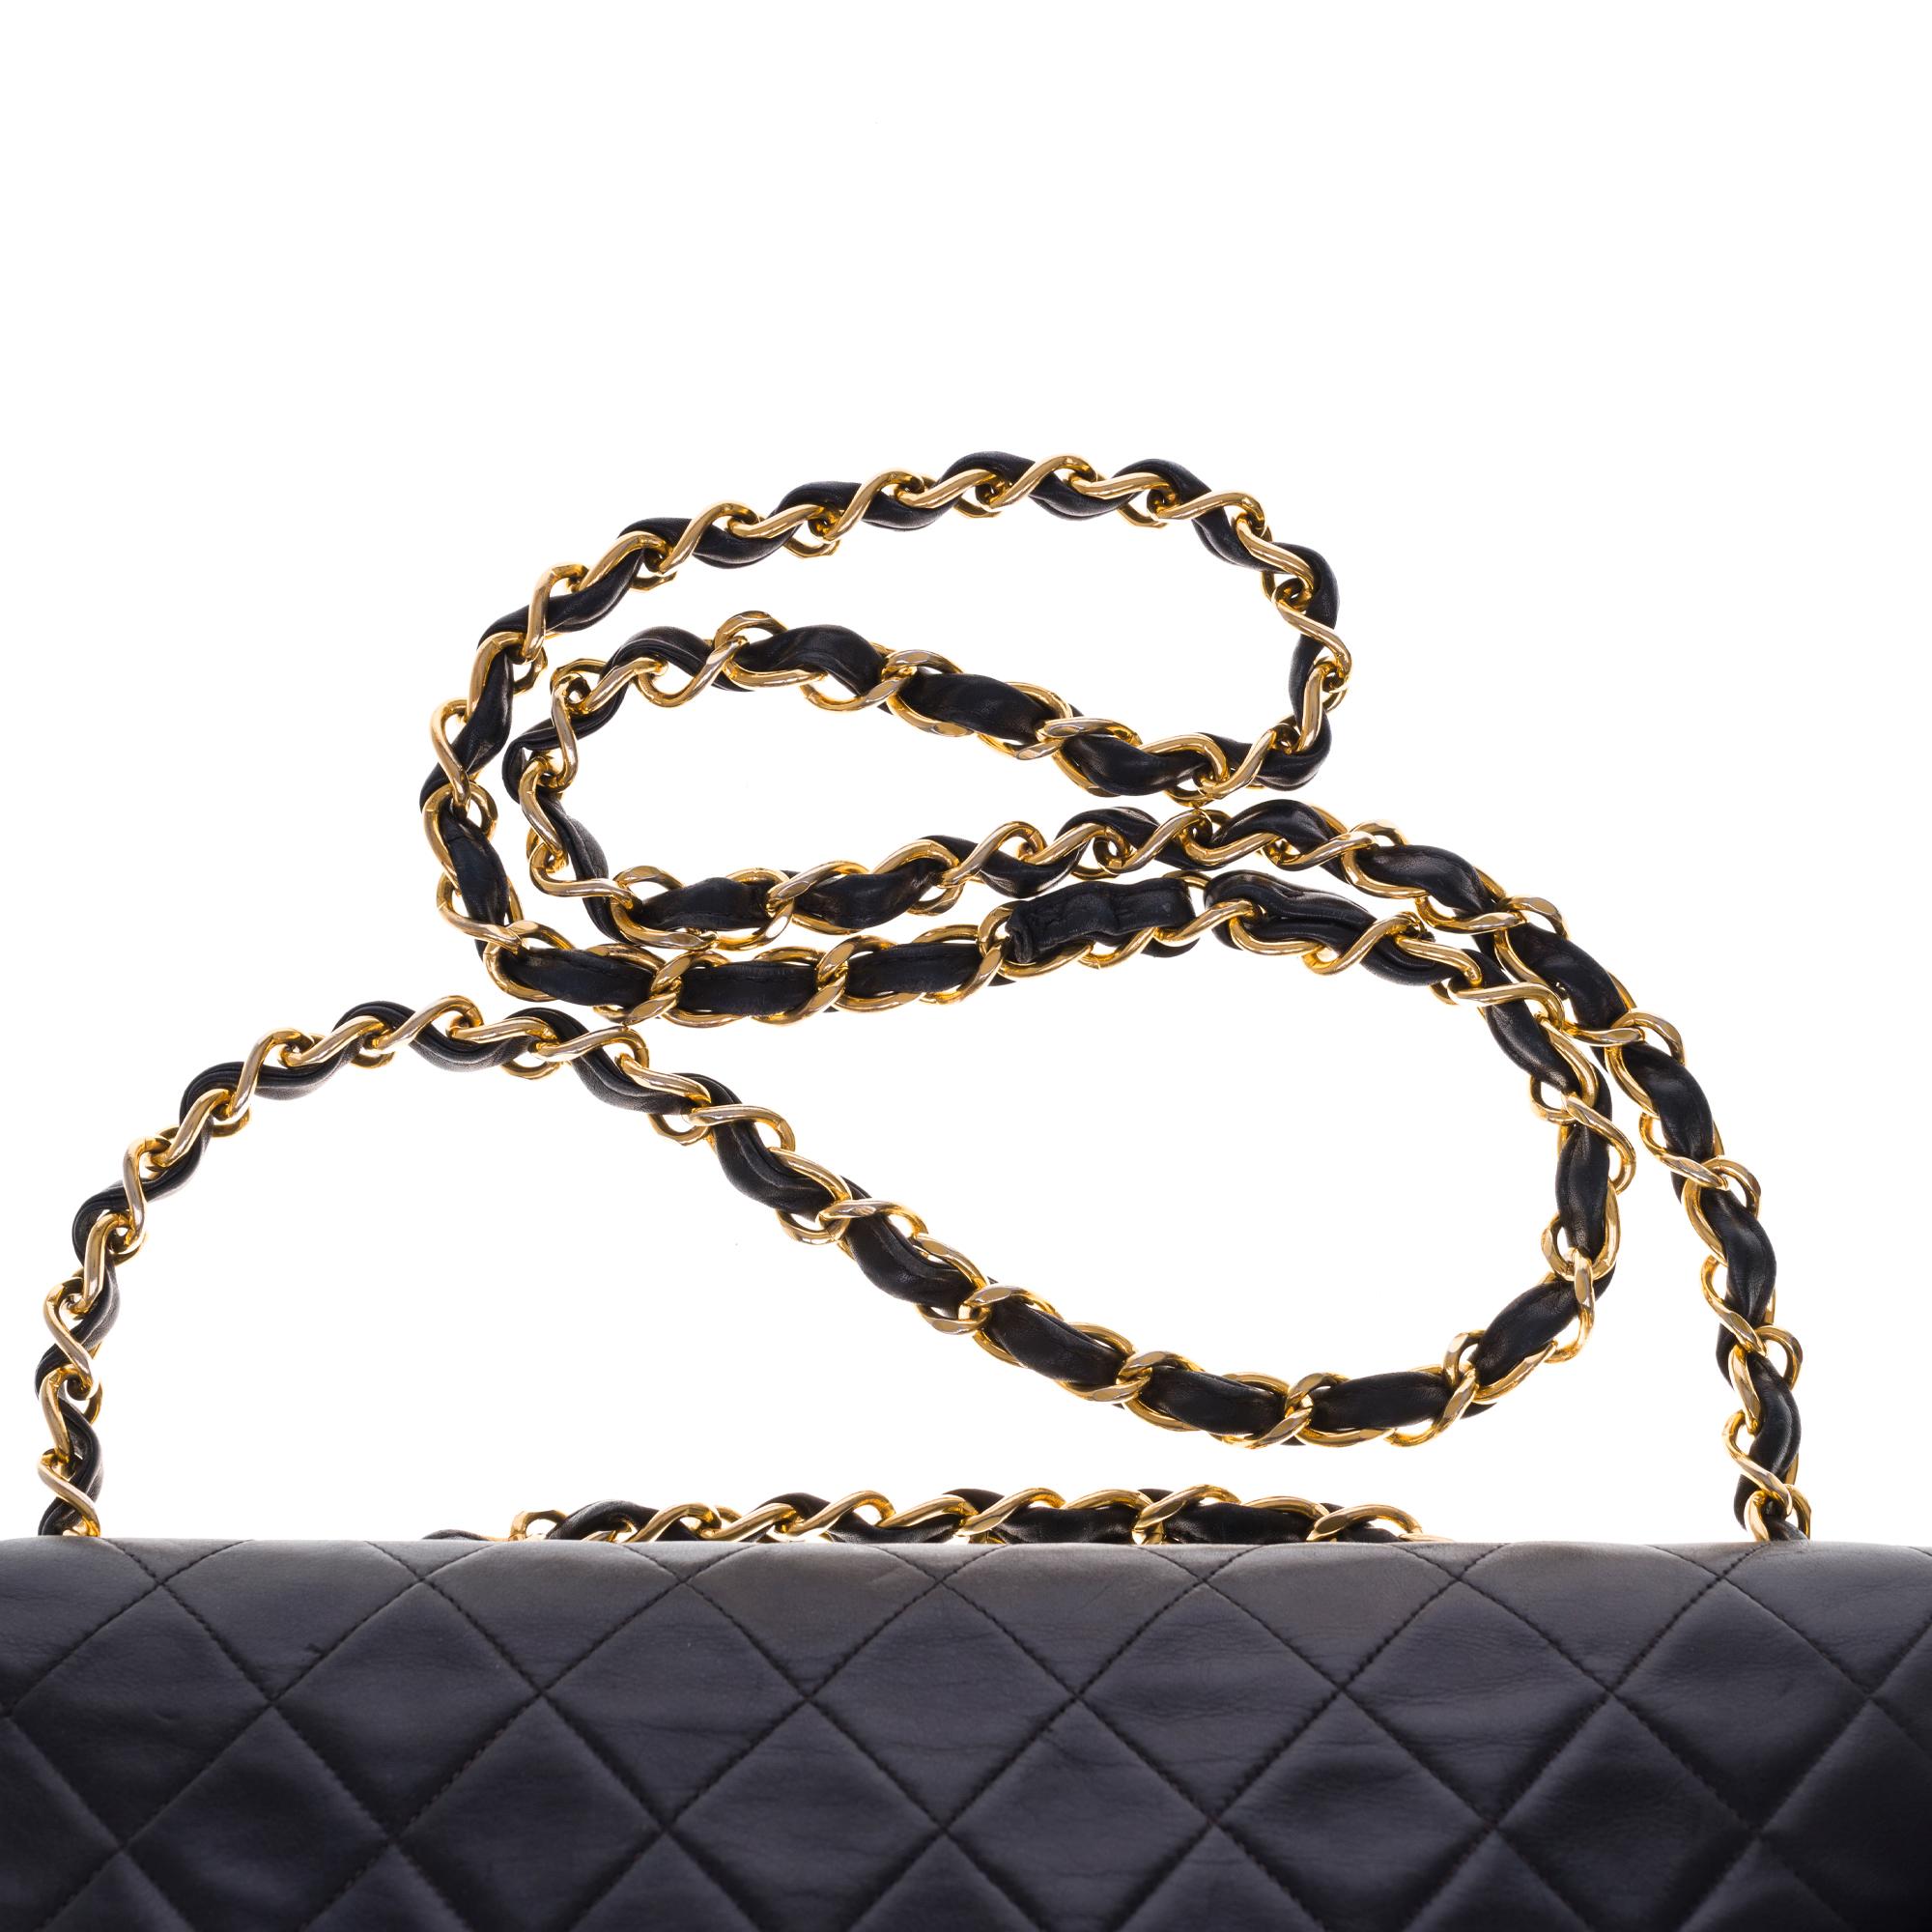 Chanel Timeless Maxi Jumbo single flap handbag in black quilted lambskin, GHW 2